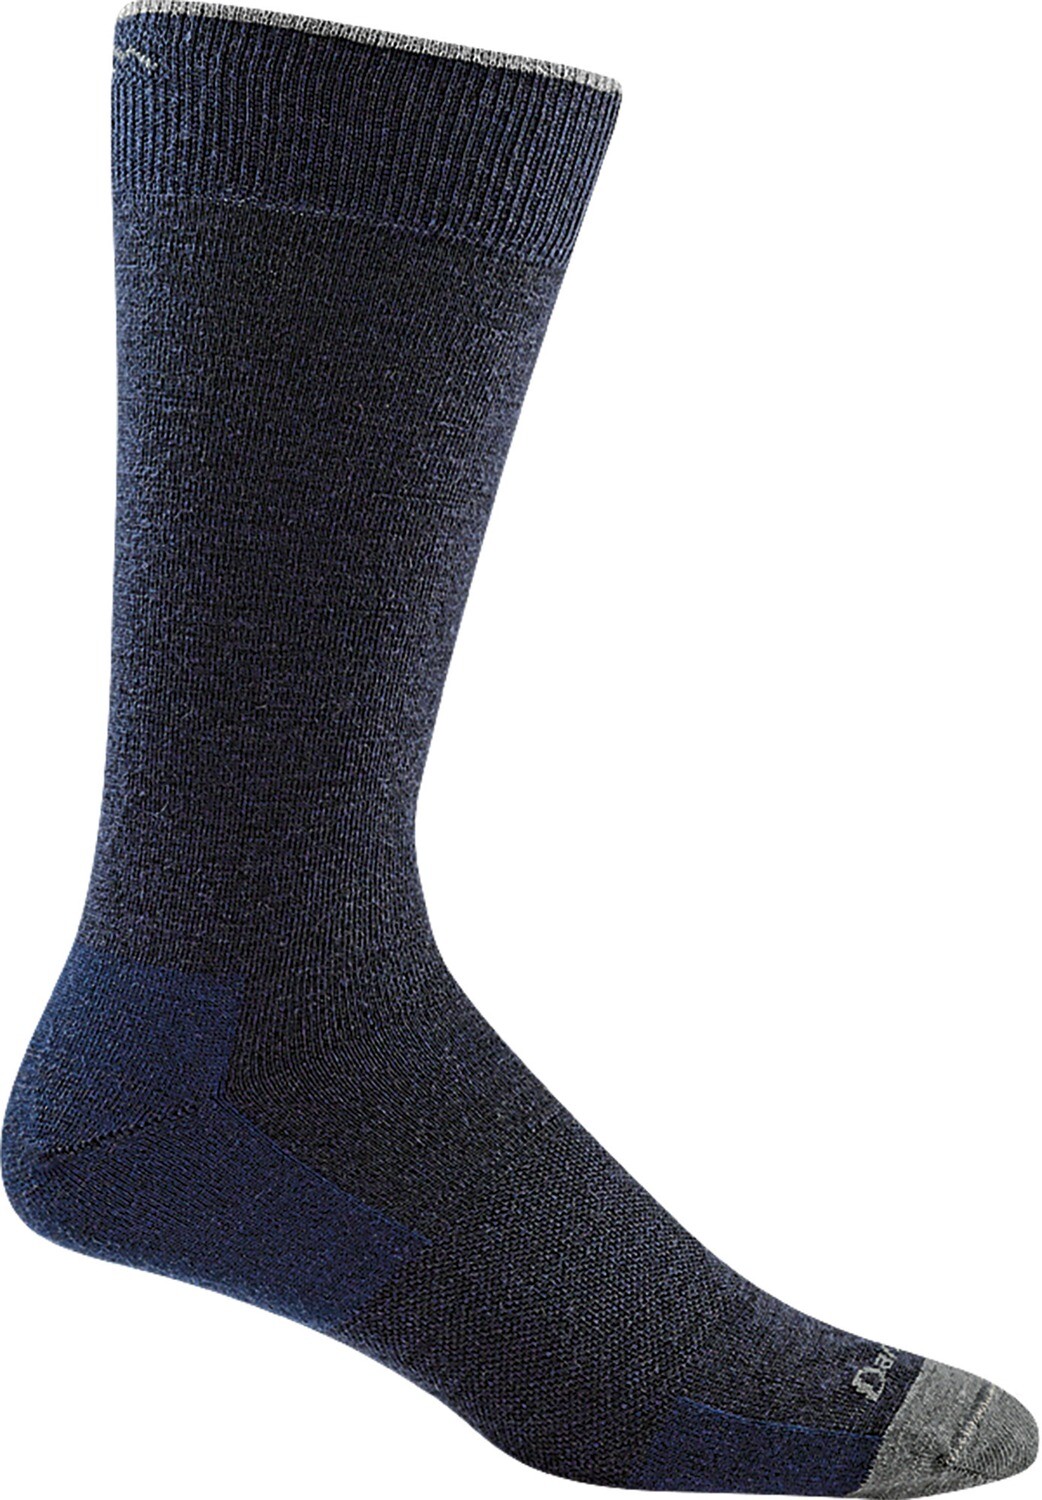 Men's/Unisex 6032 Solid Crew Lightweight Lifestyle Sock